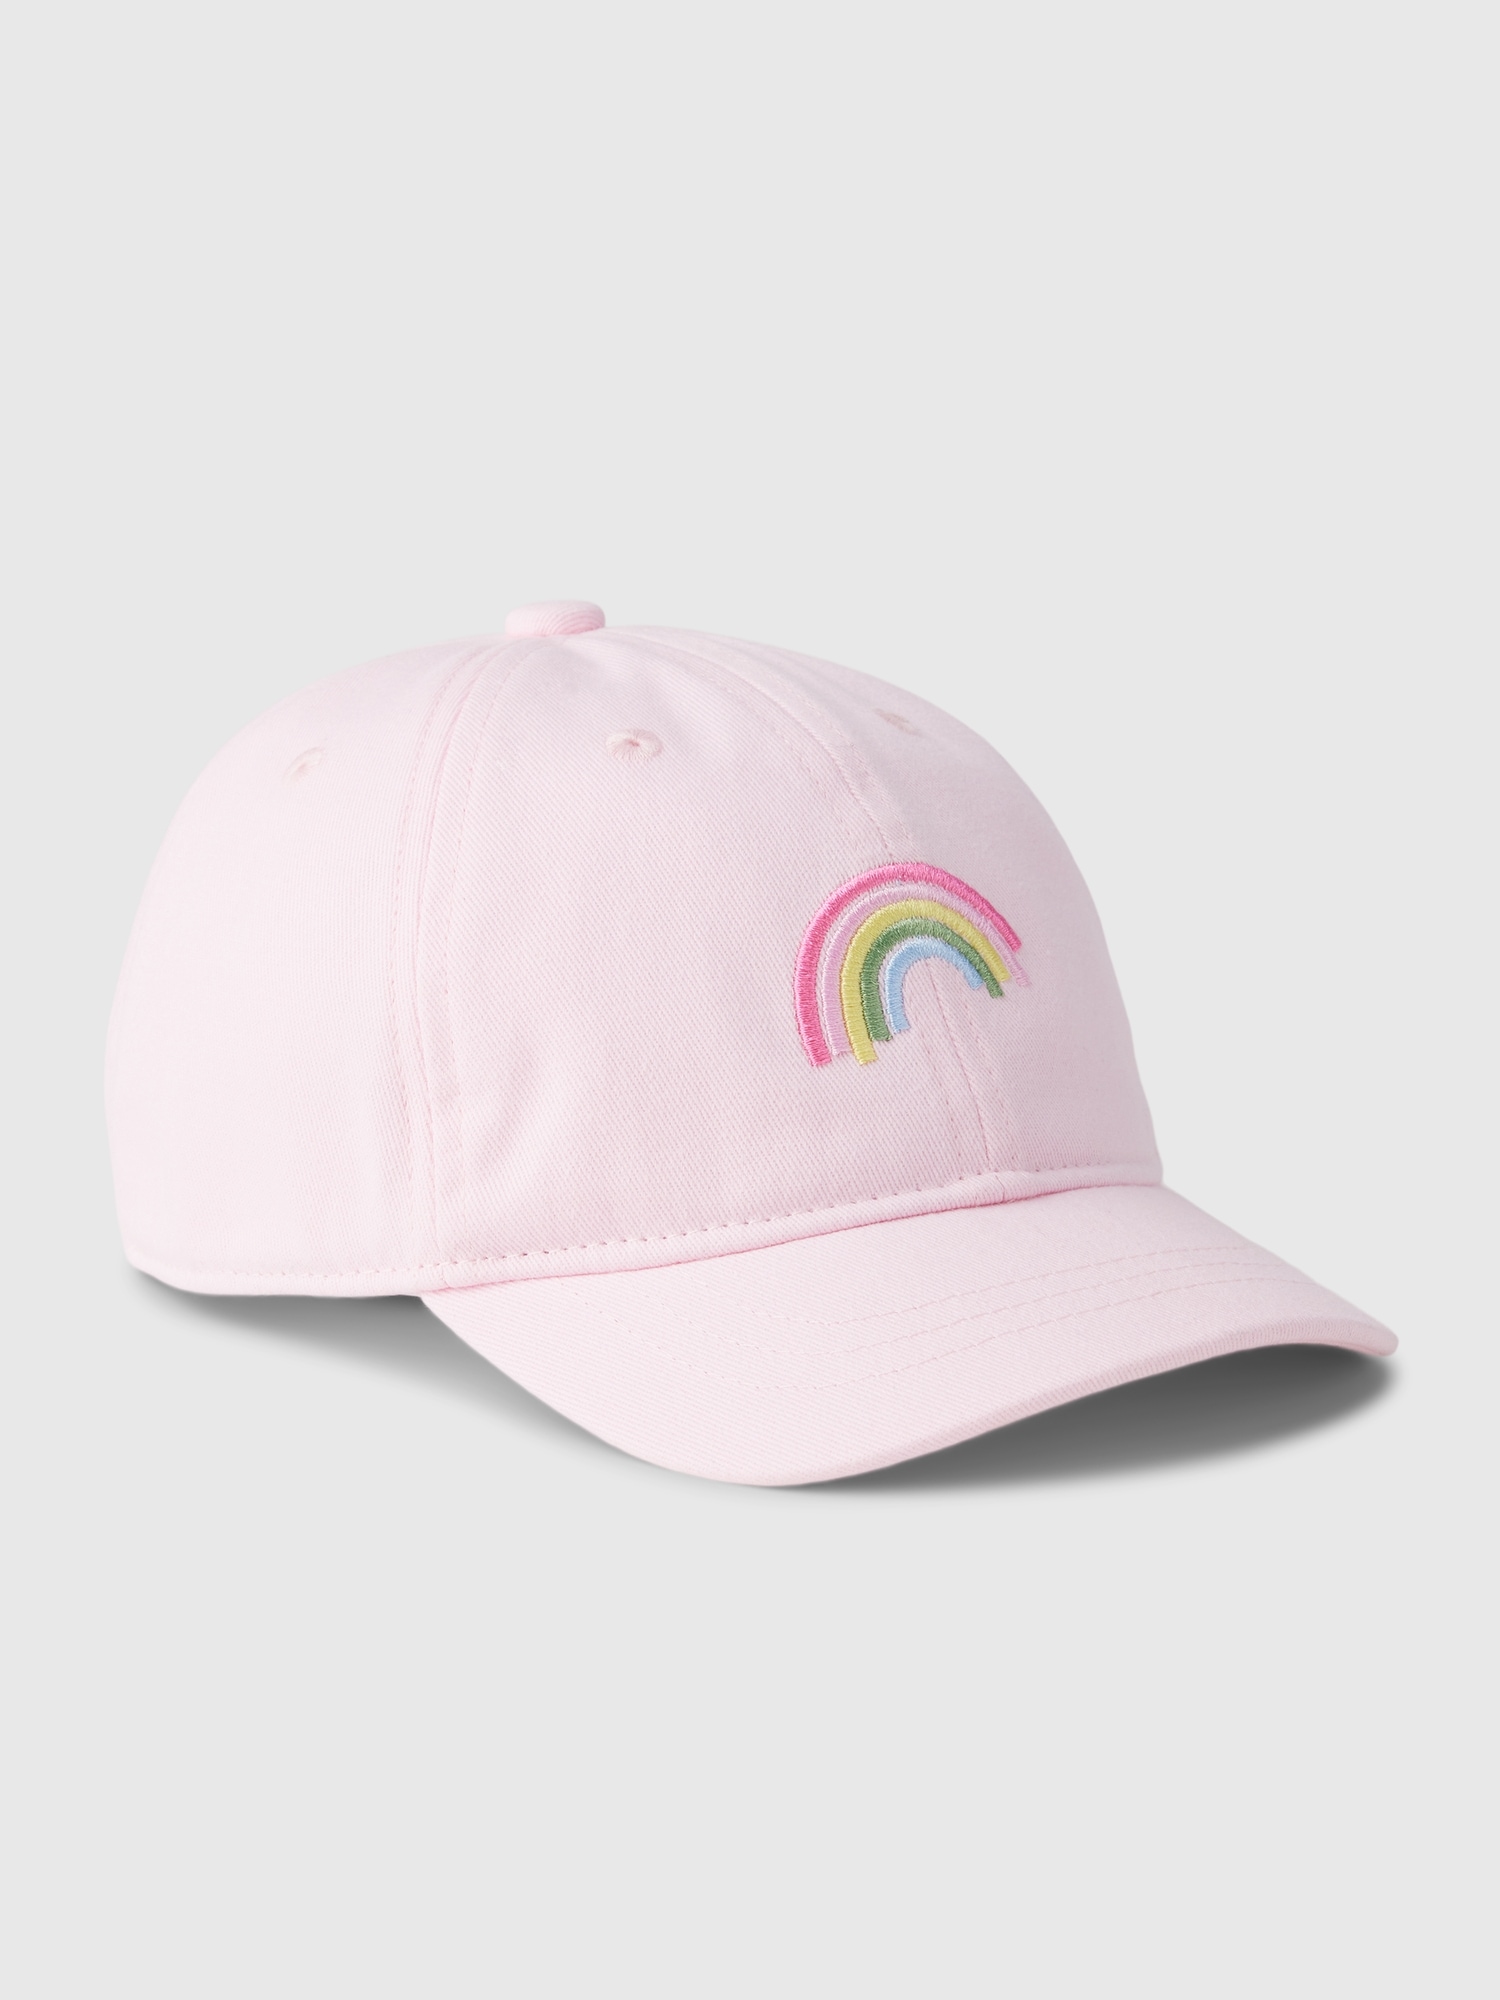 Gap Babies' Toddler Rainbow Baseball Hat In Light Peony Pink